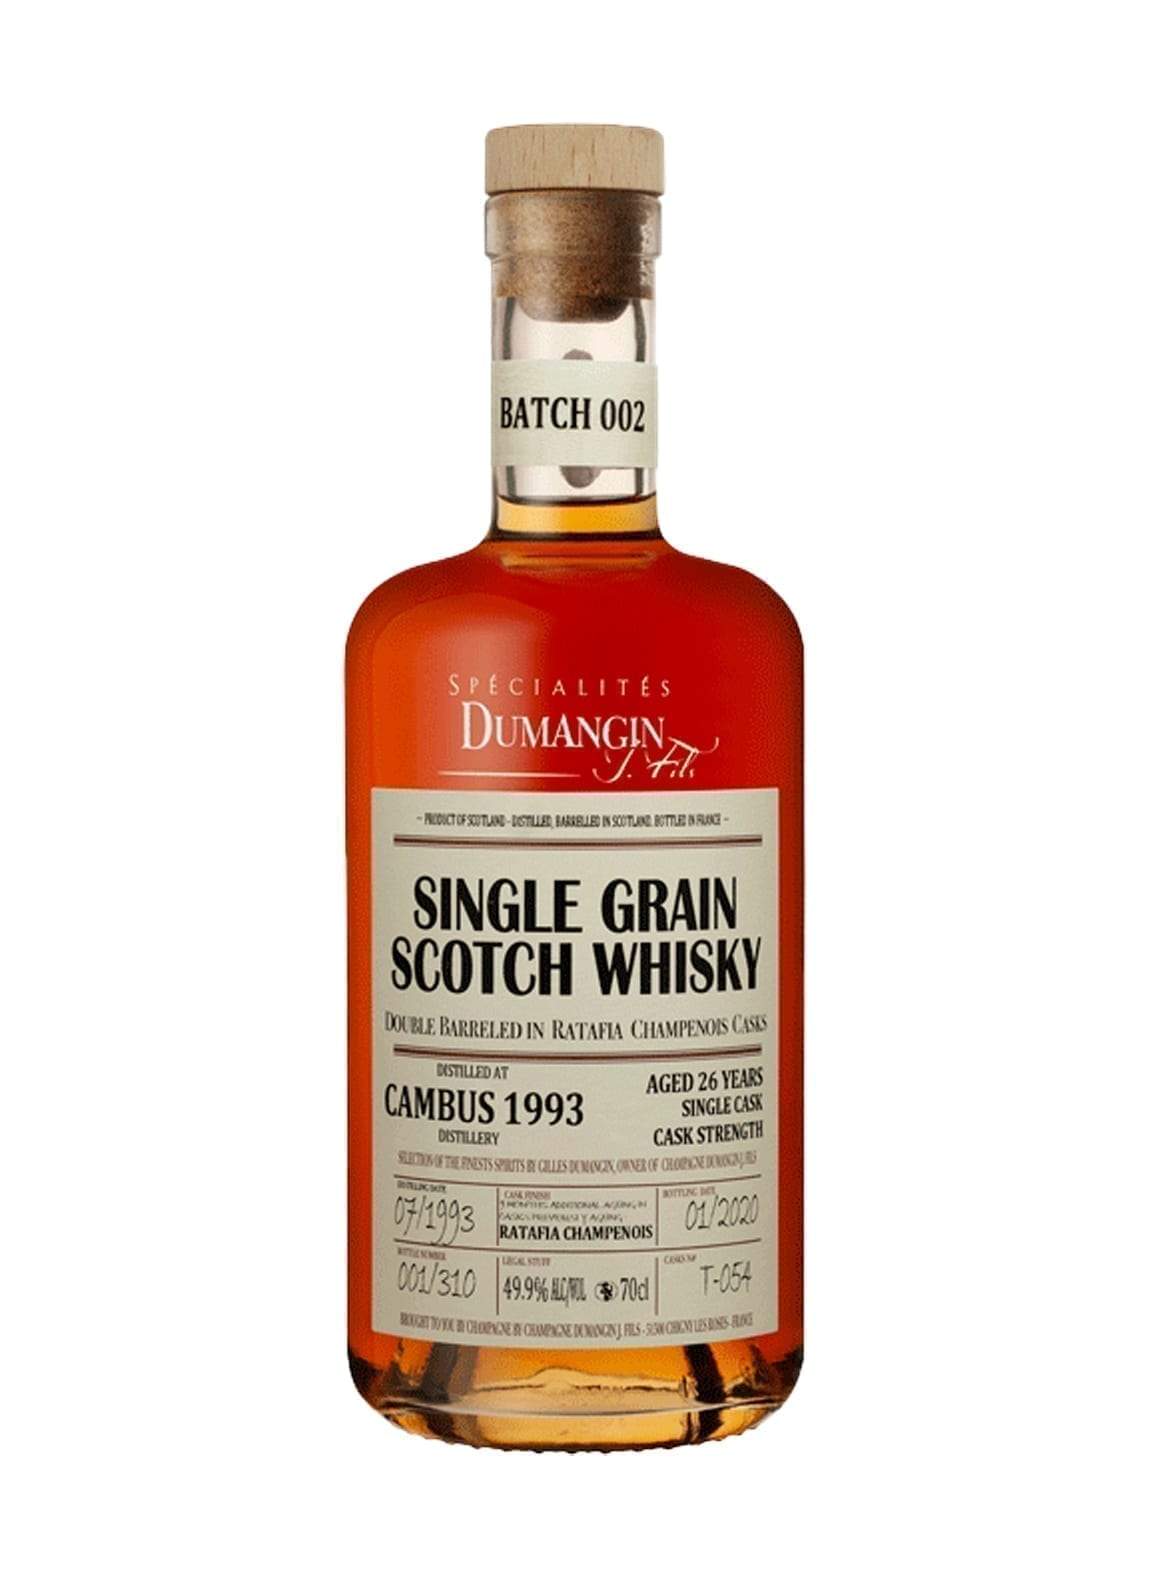 Dumangin Batch 002 Single Grain Scotch Whisky 49.95% 700ml | Whiskey | Shop online at Spirits of France